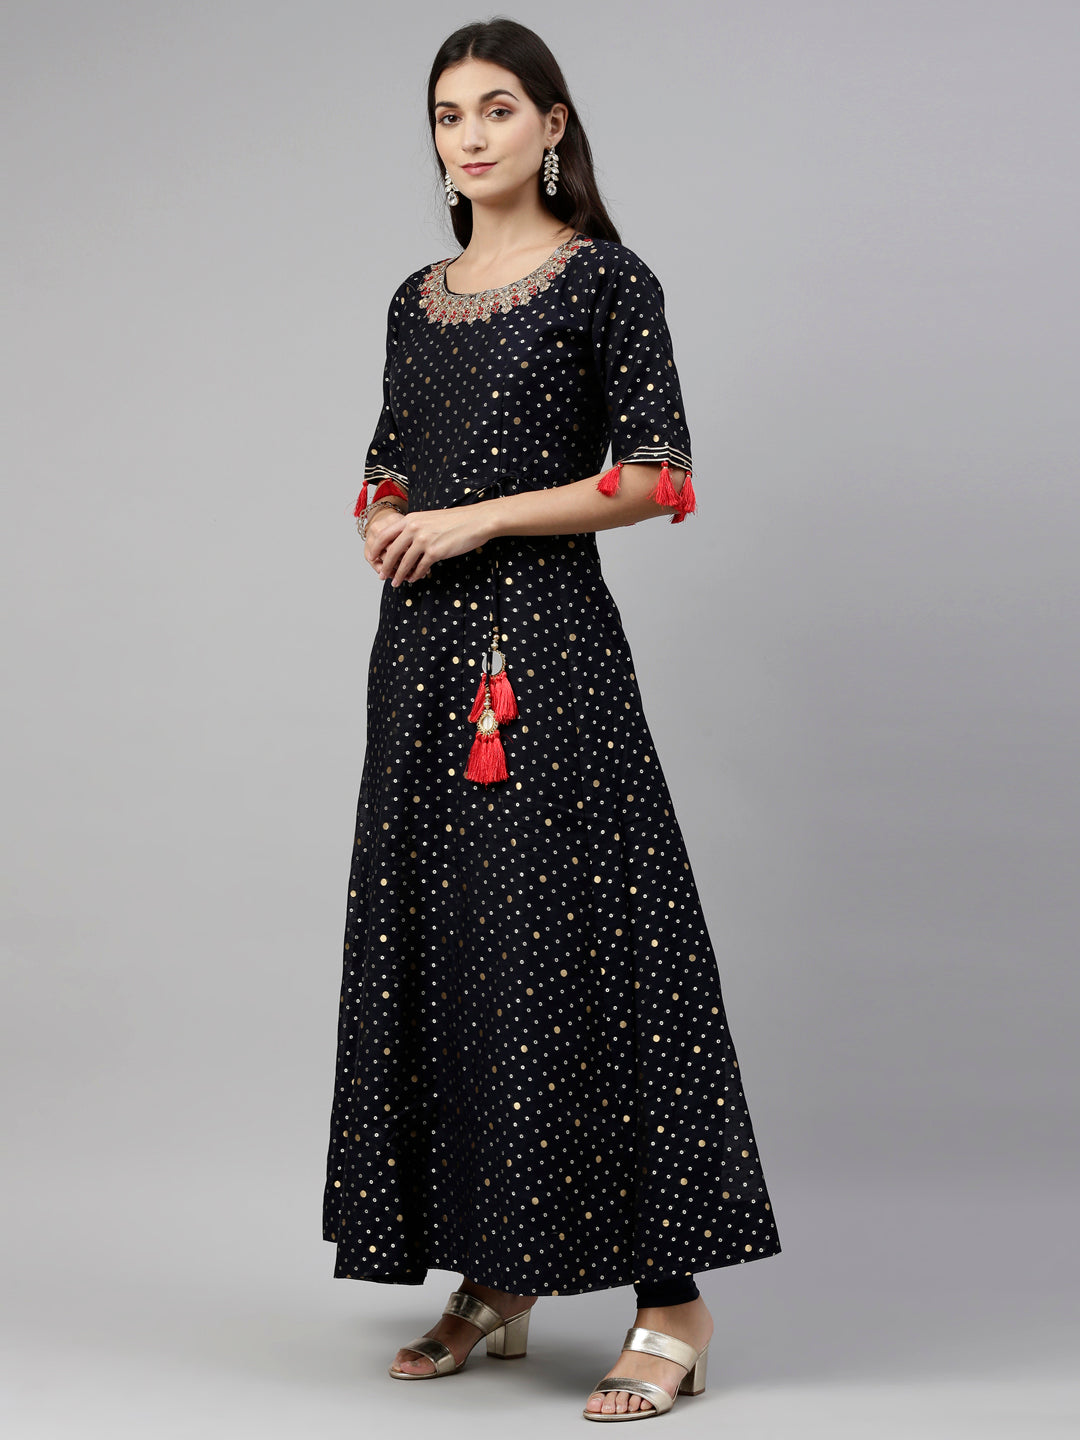 Neeru's Navy Blue Color Chanderi Fabric Suit-Anarkali